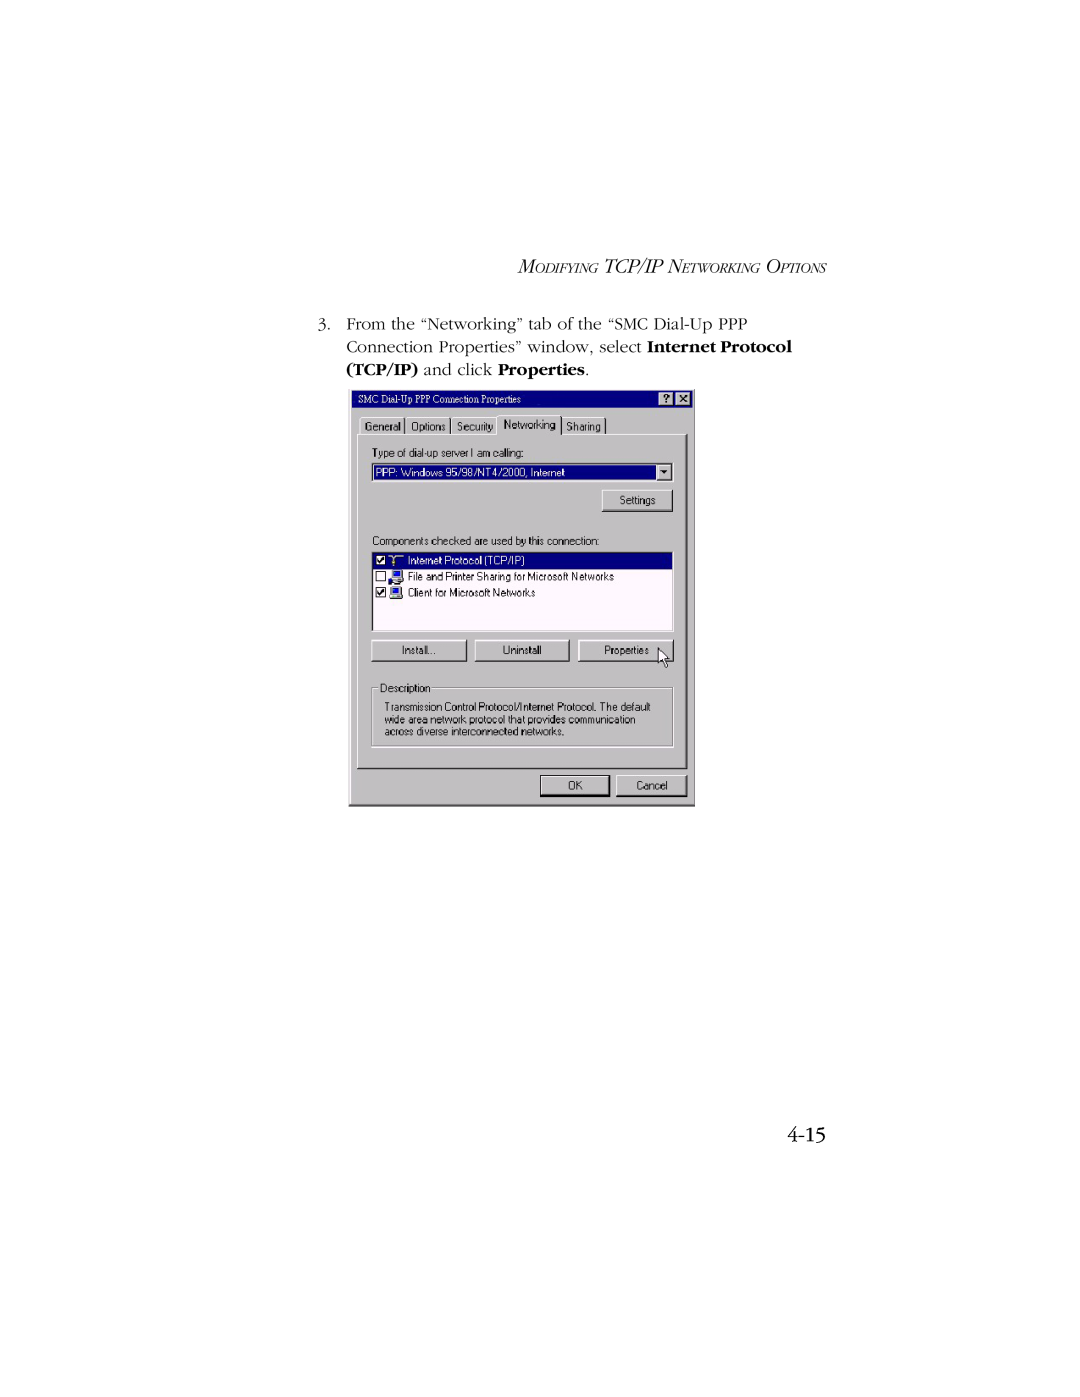 SMC Networks SMC7003-USB manual 4-15, Modifying Tcp/Ip Networking Options 